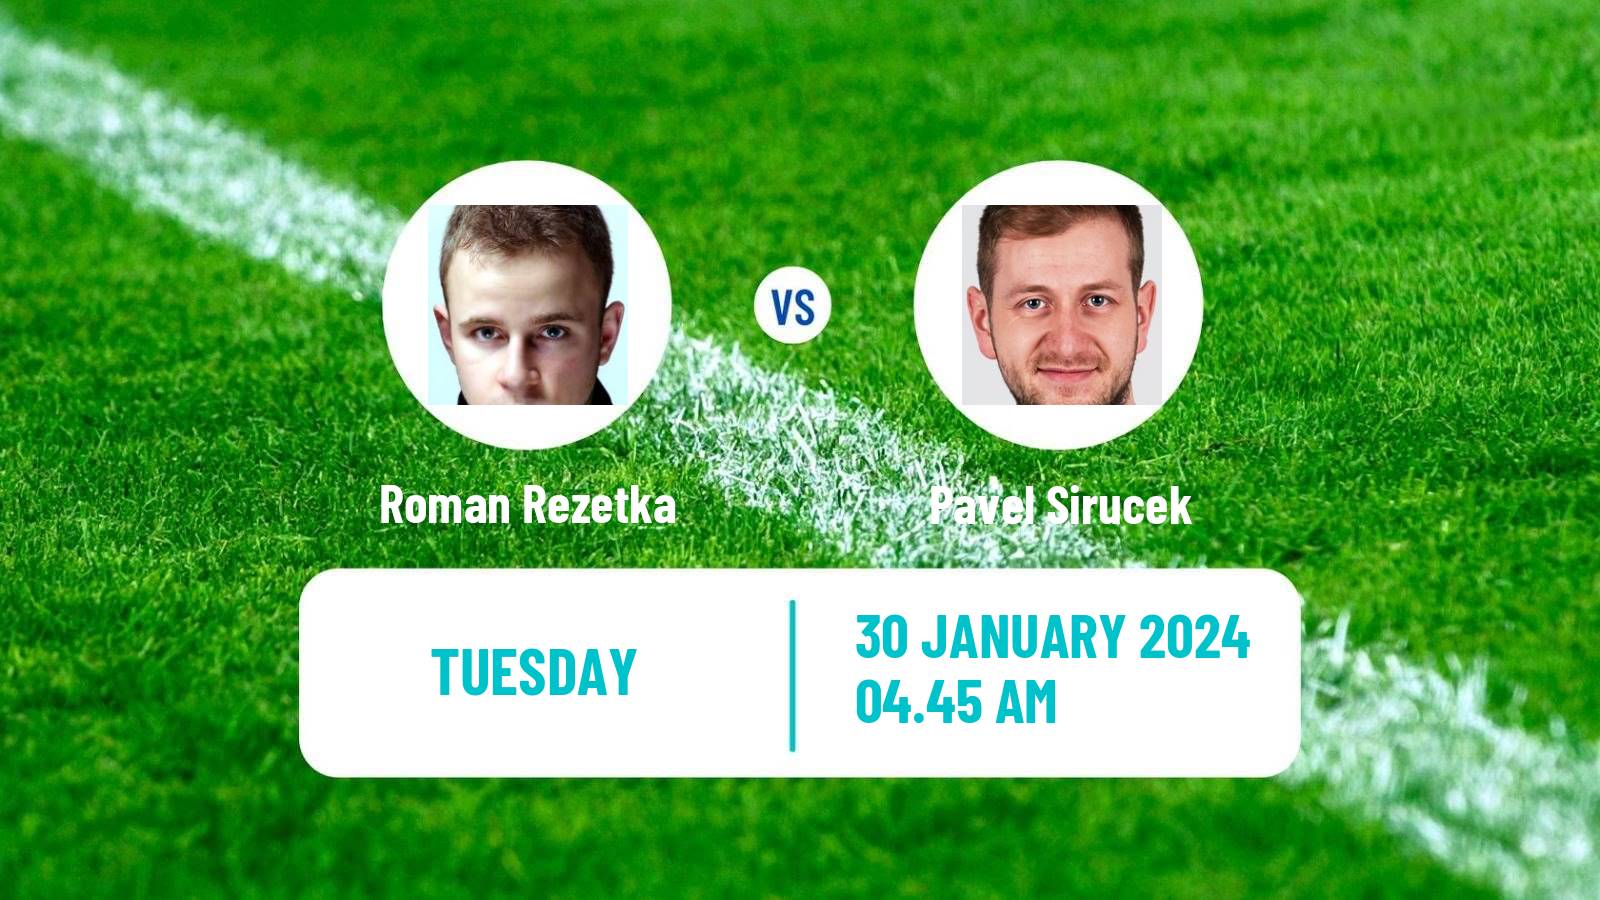 Table tennis Tt Star Series Men Roman Rezetka - Pavel Sirucek